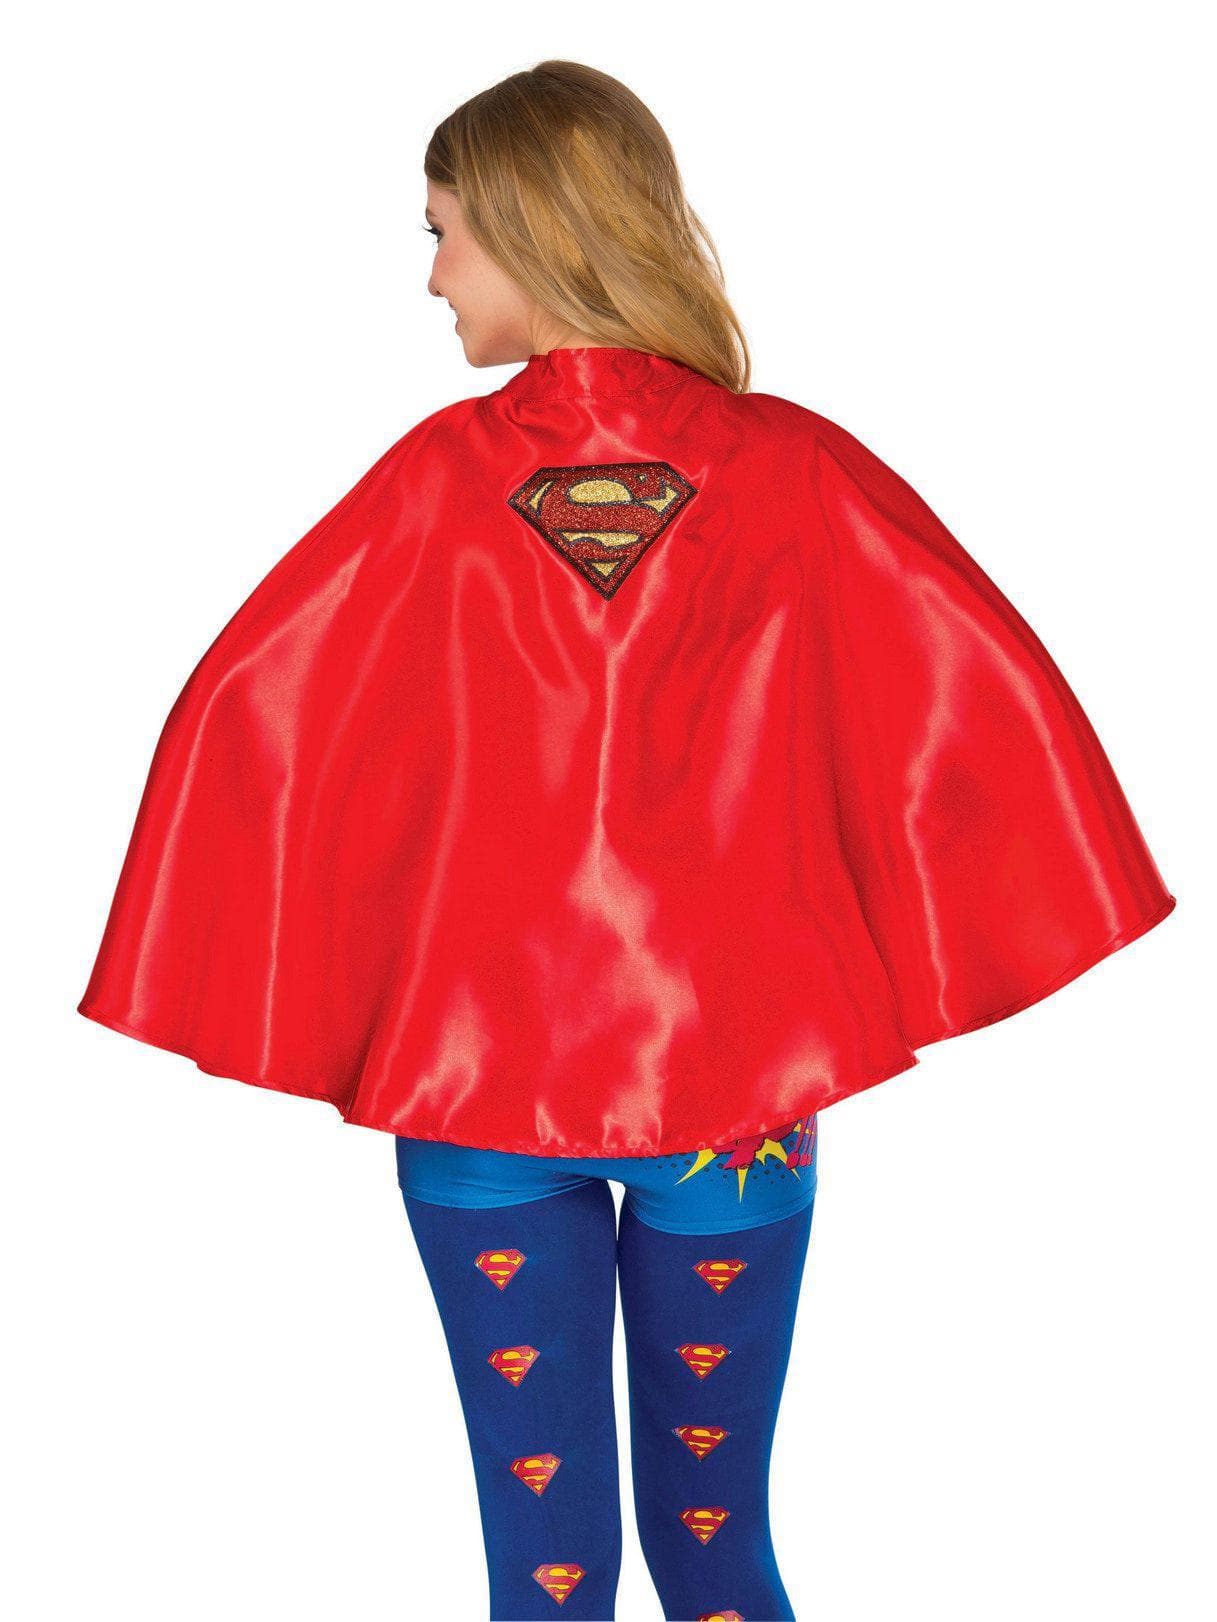 Women's Short Supergirl Cape - costumes.com